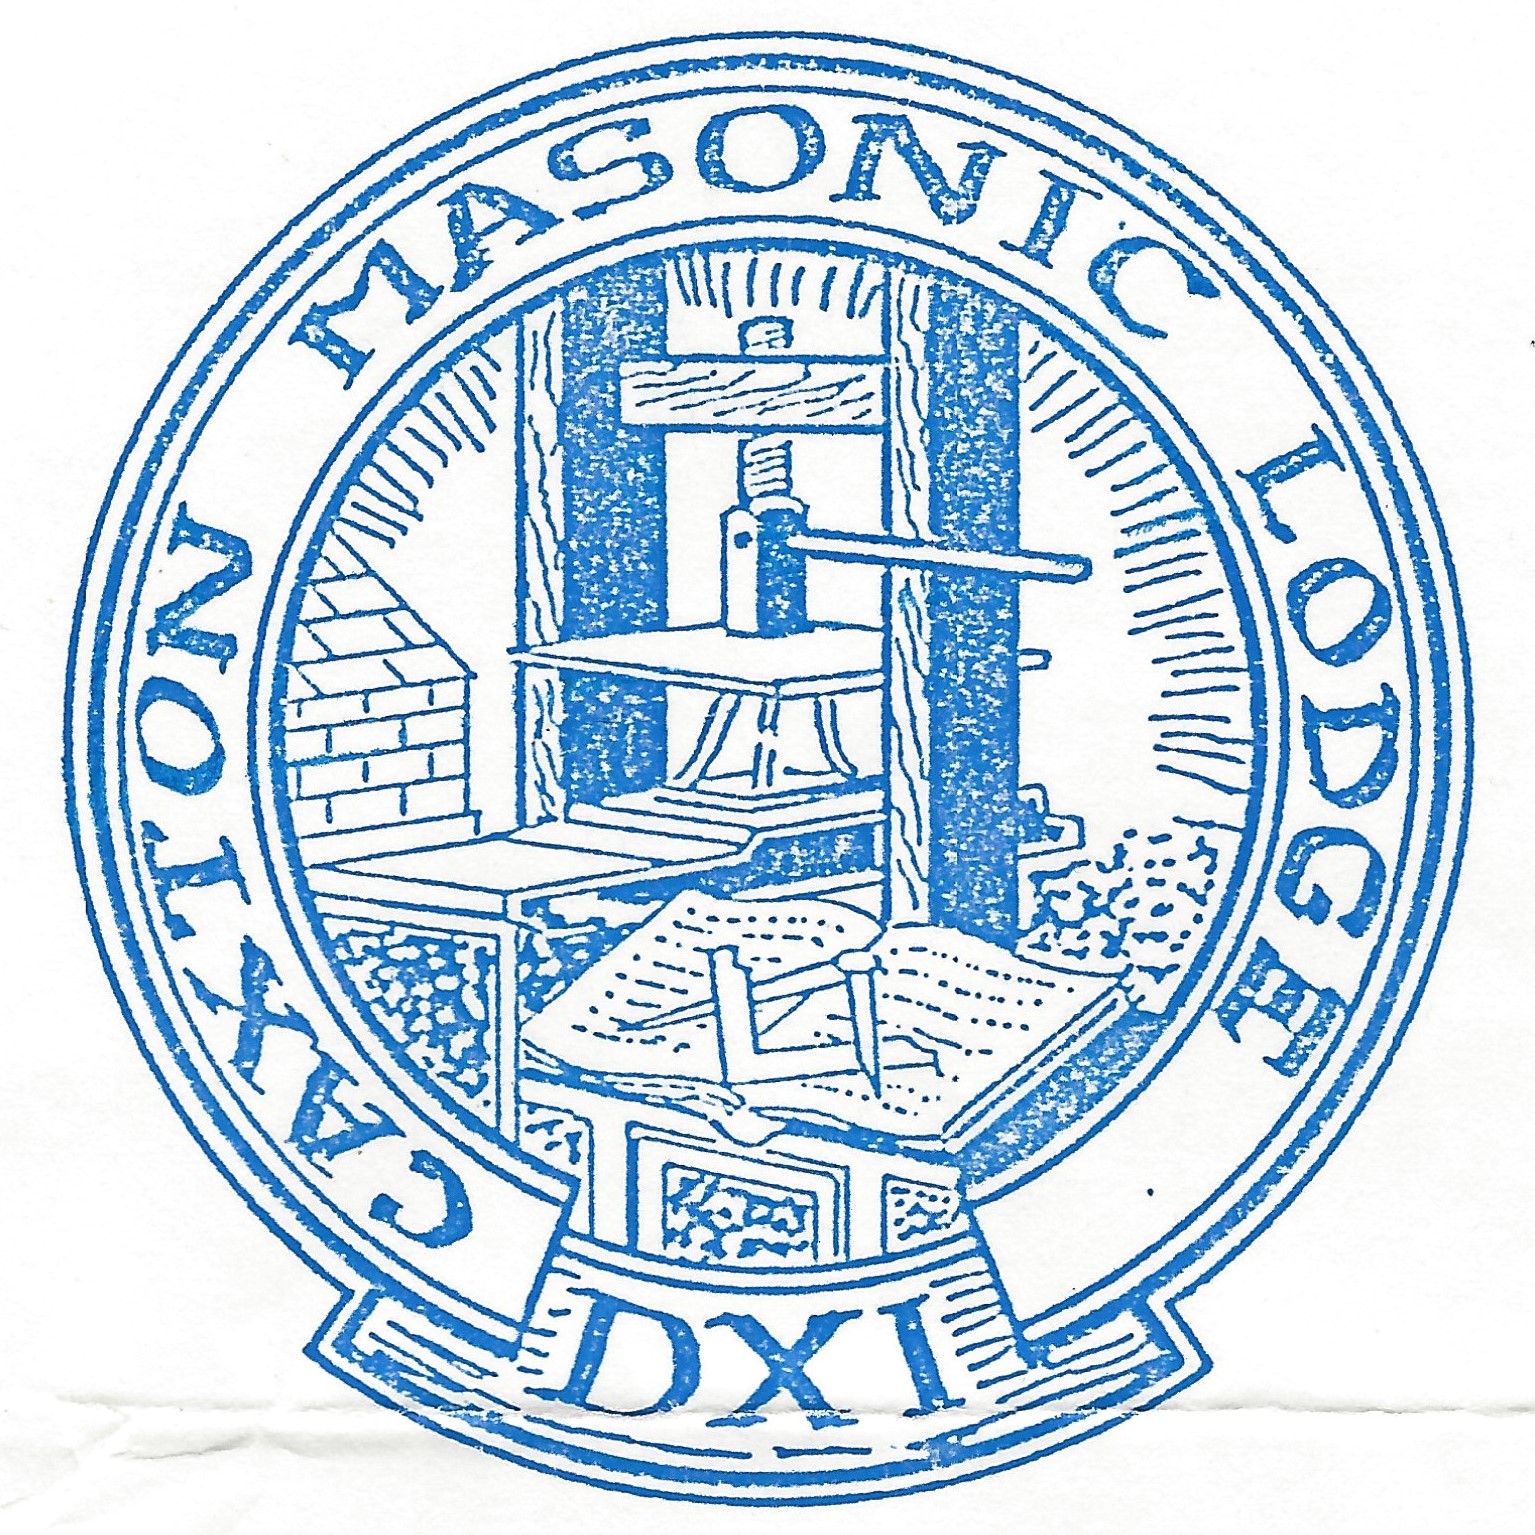 Caxton Masonic Lodge 511